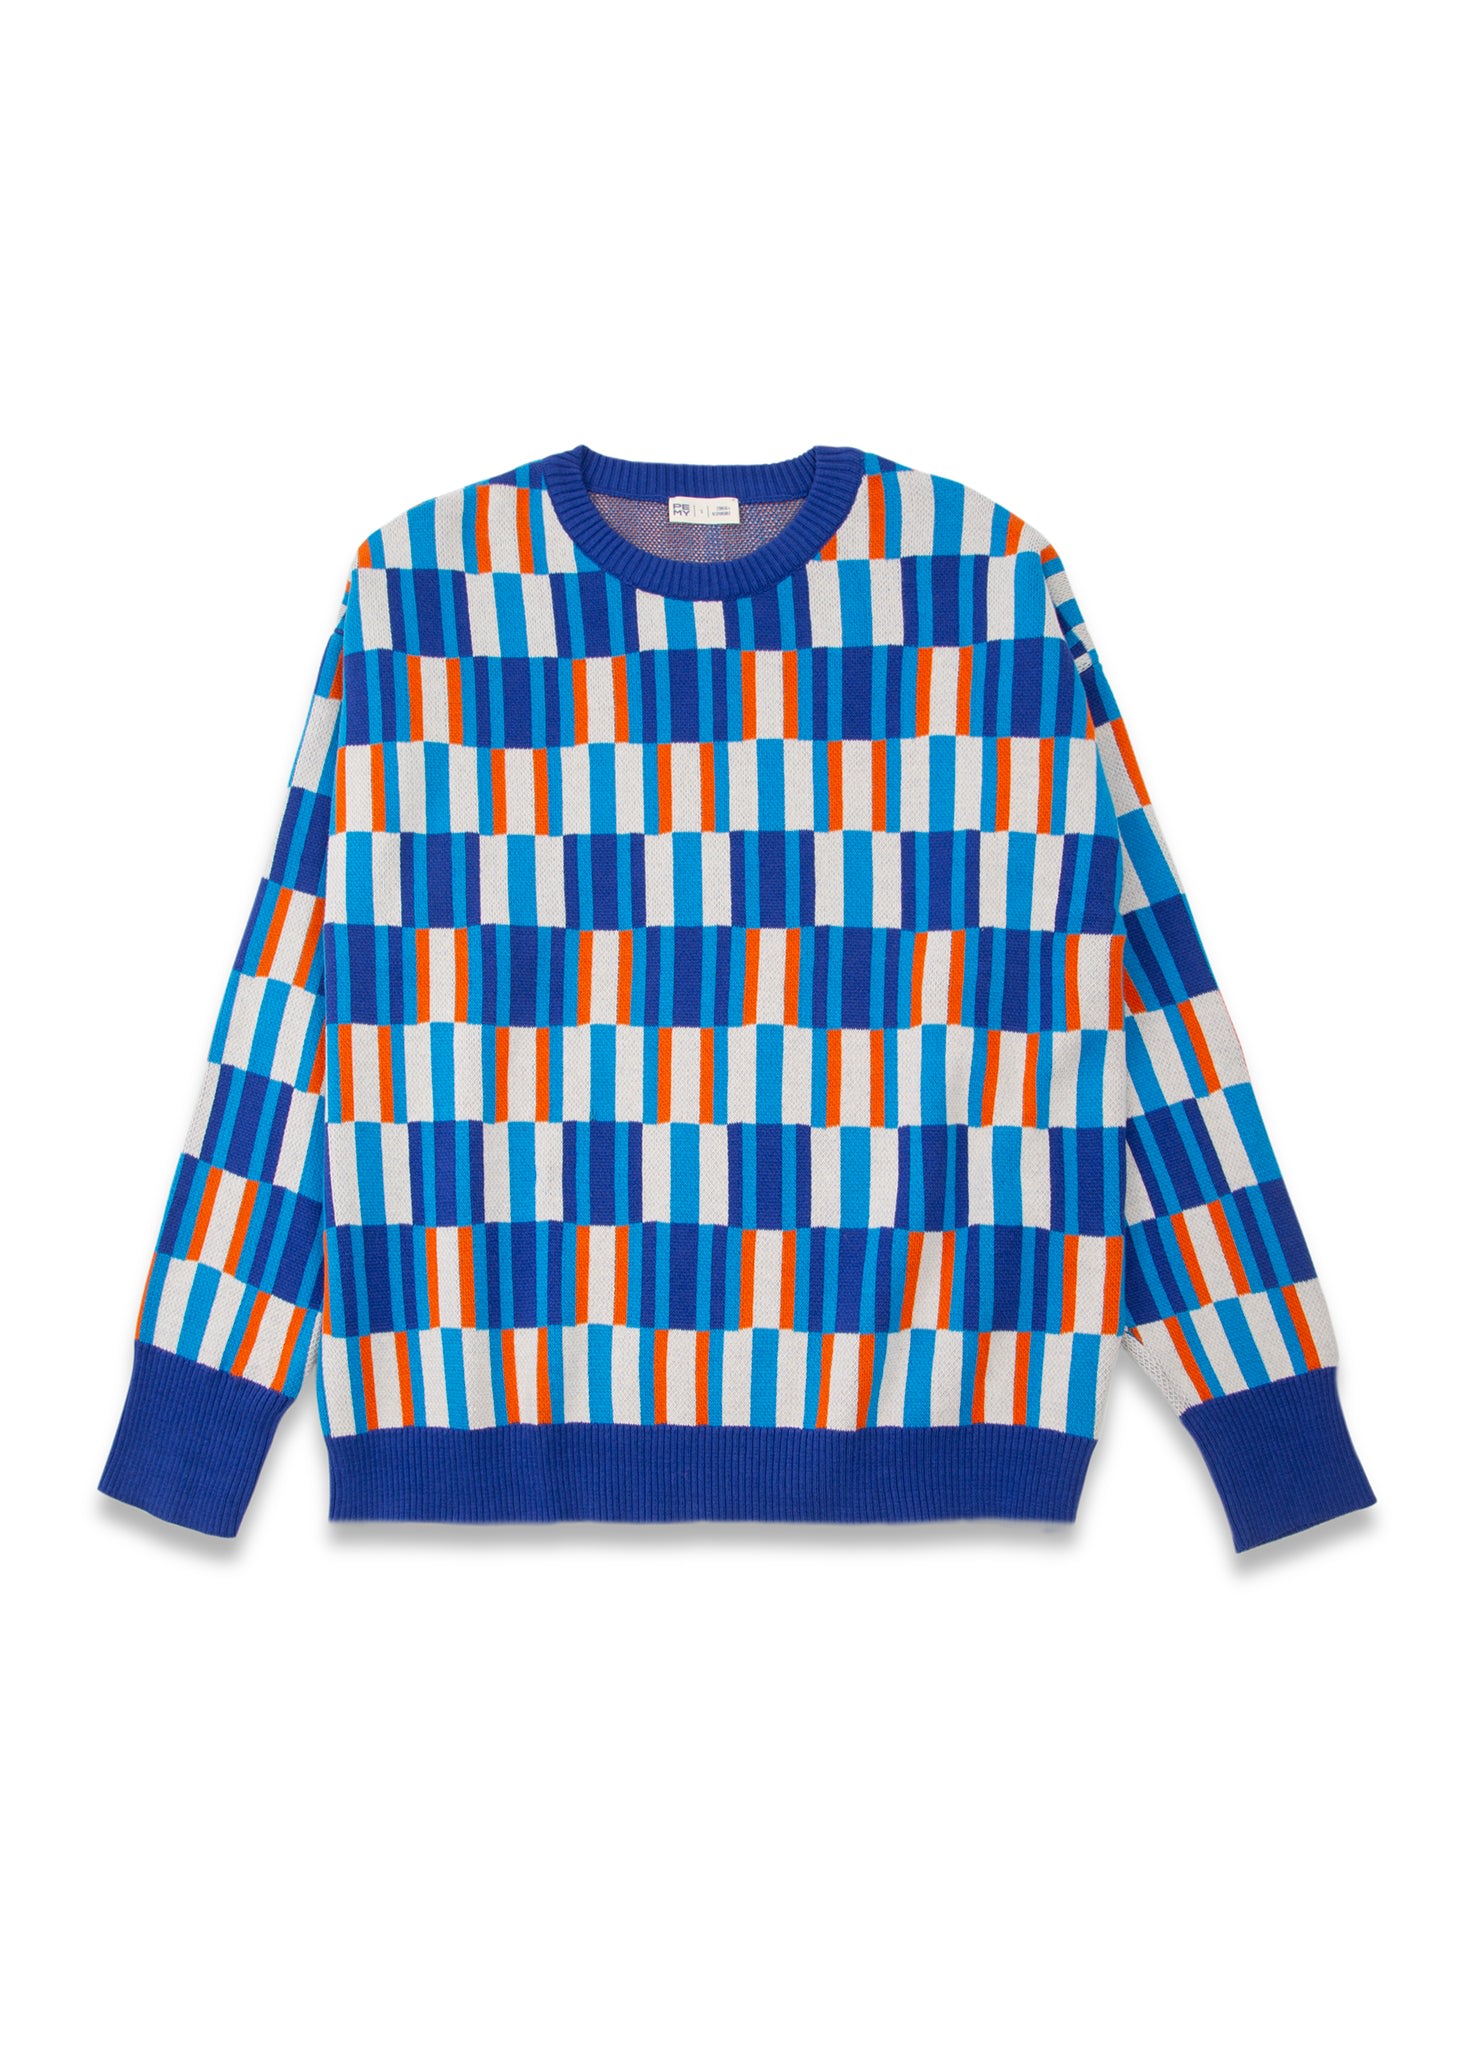 Women’s Yellow / Orange / Blue Pieces Oversize Jacquard Cotton Knit Sweater Medium Pemy